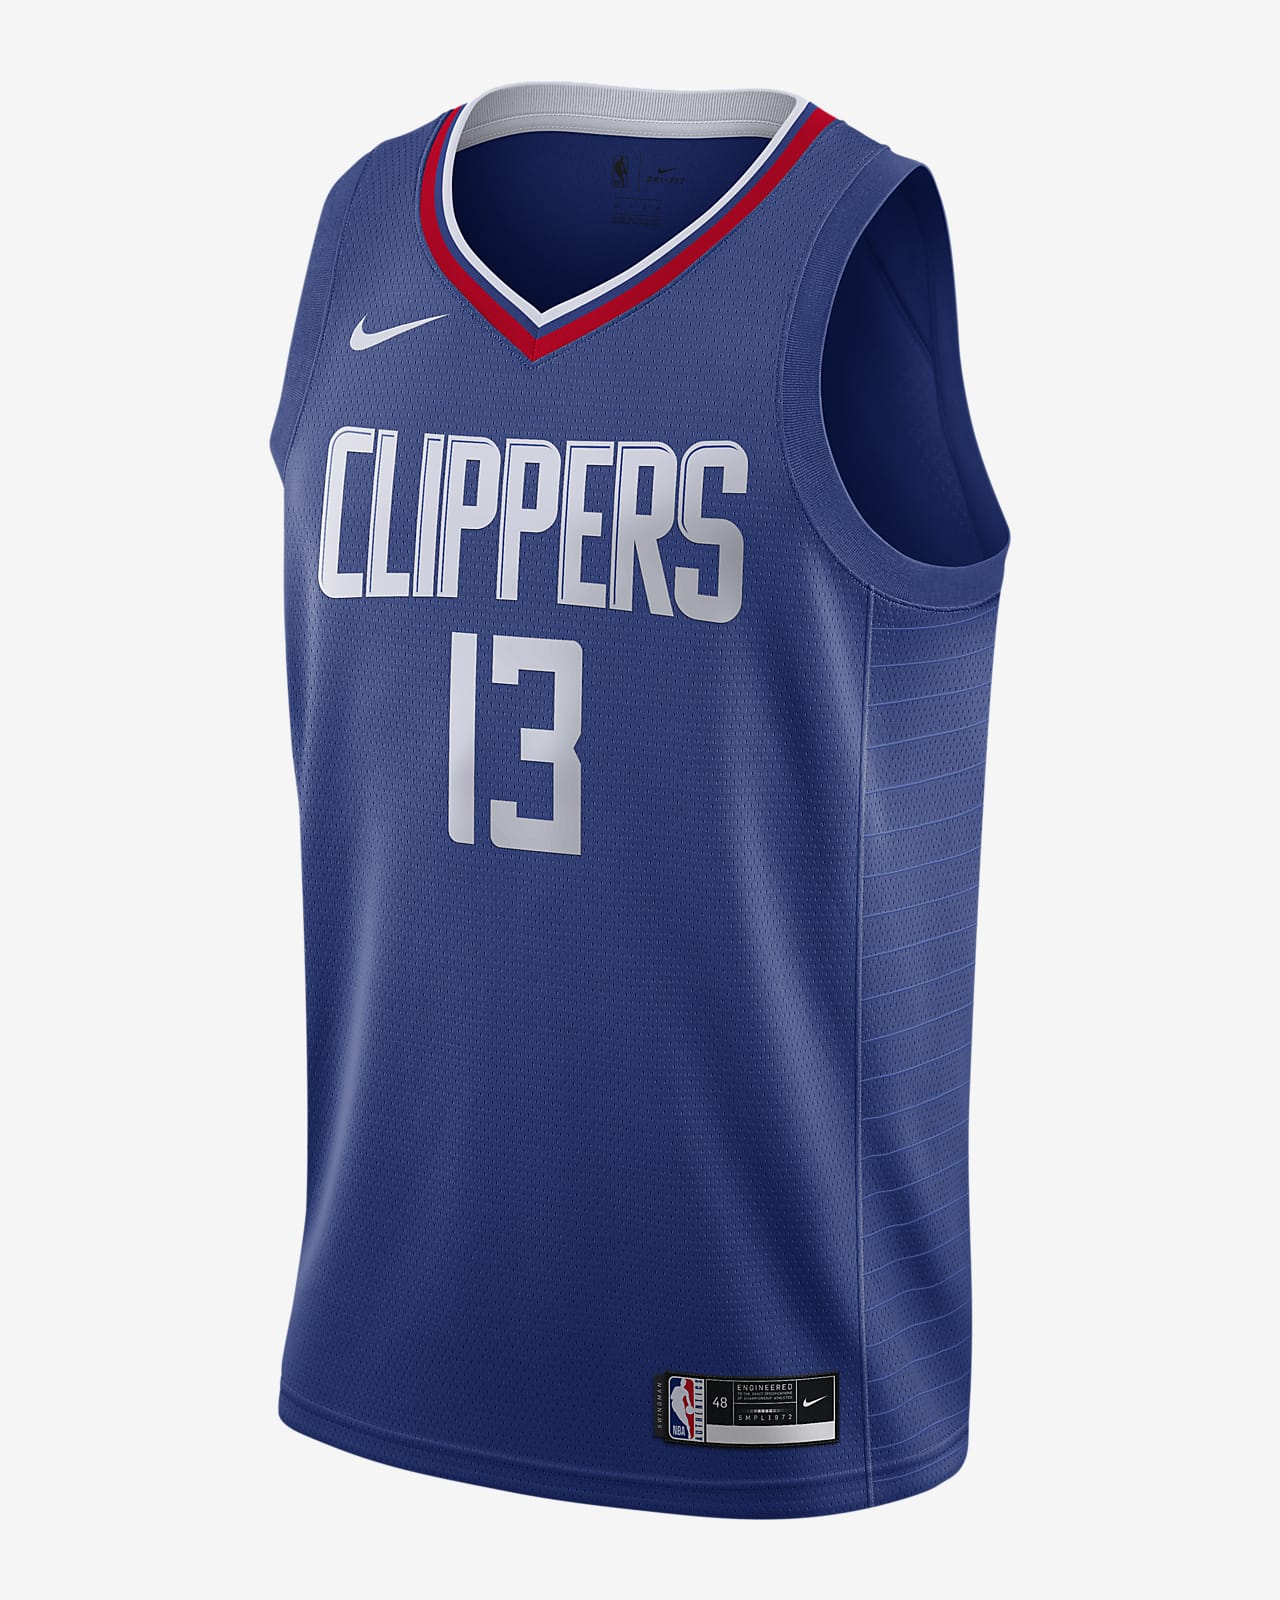 Paul George Clippers Icon Edition 2020 Nike NBA Swingman Jersey